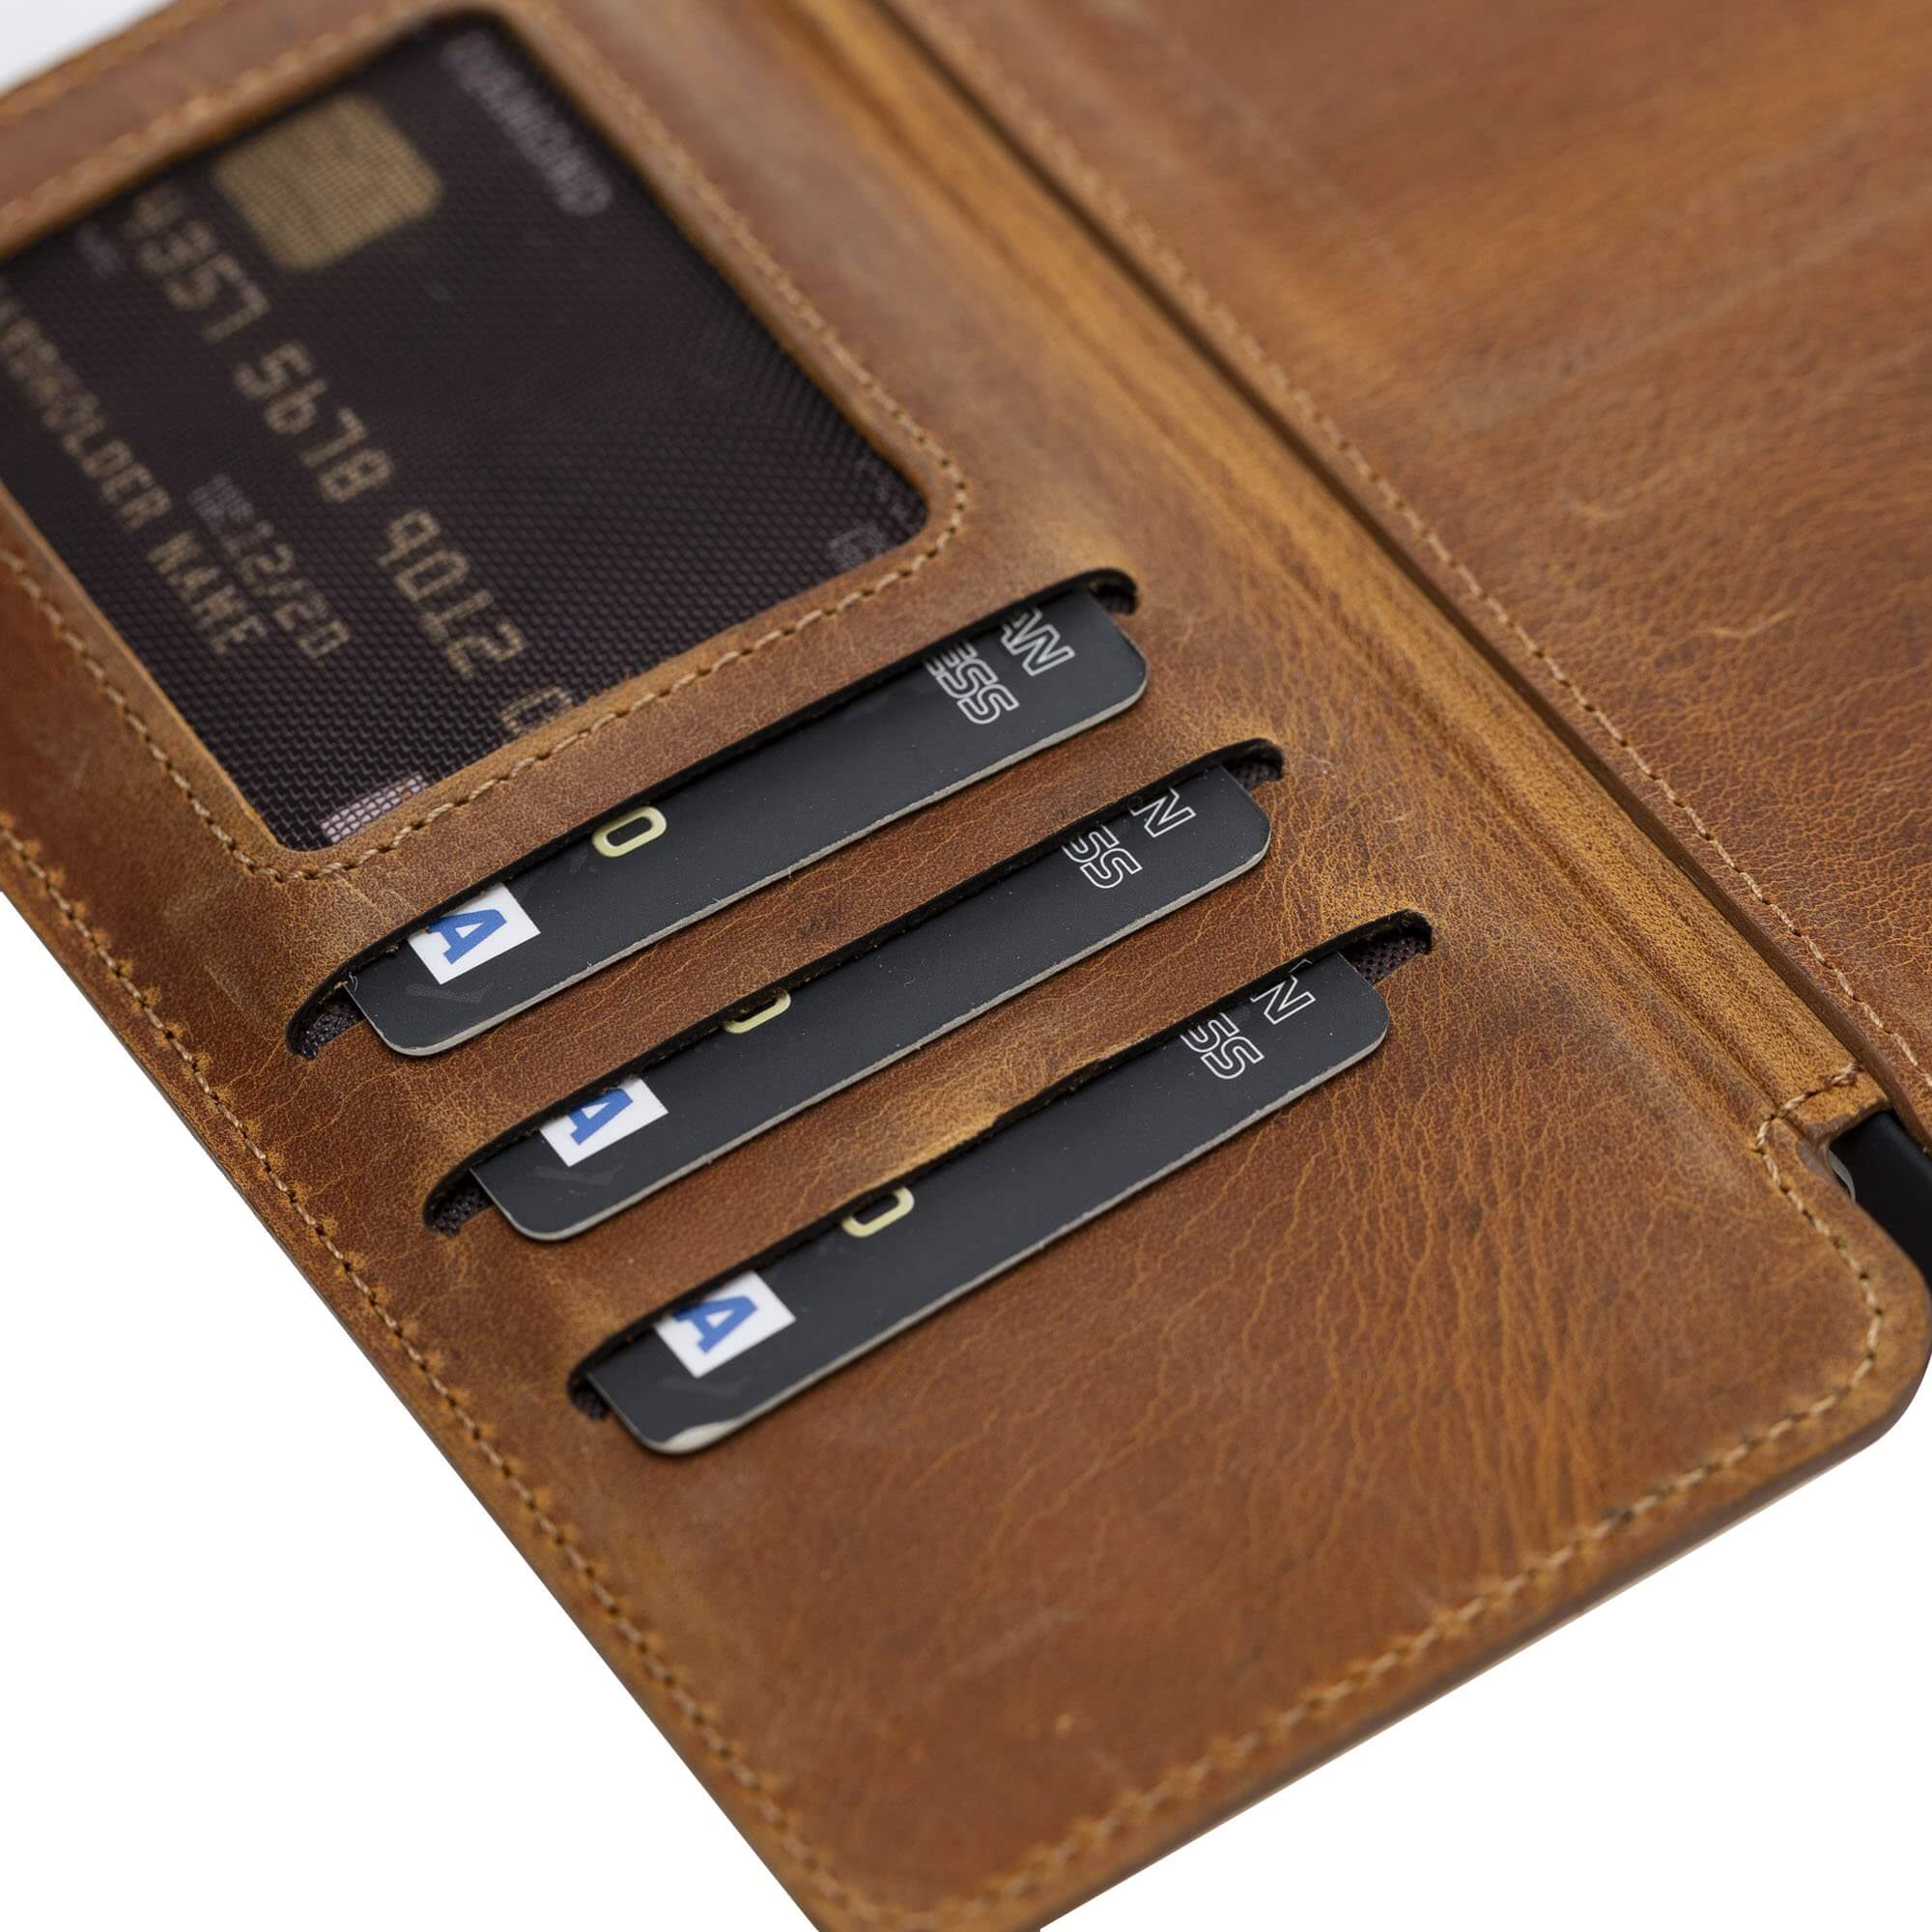 Lola XO - Premium iPhone 8 Plus leather wristlet case - Vaja